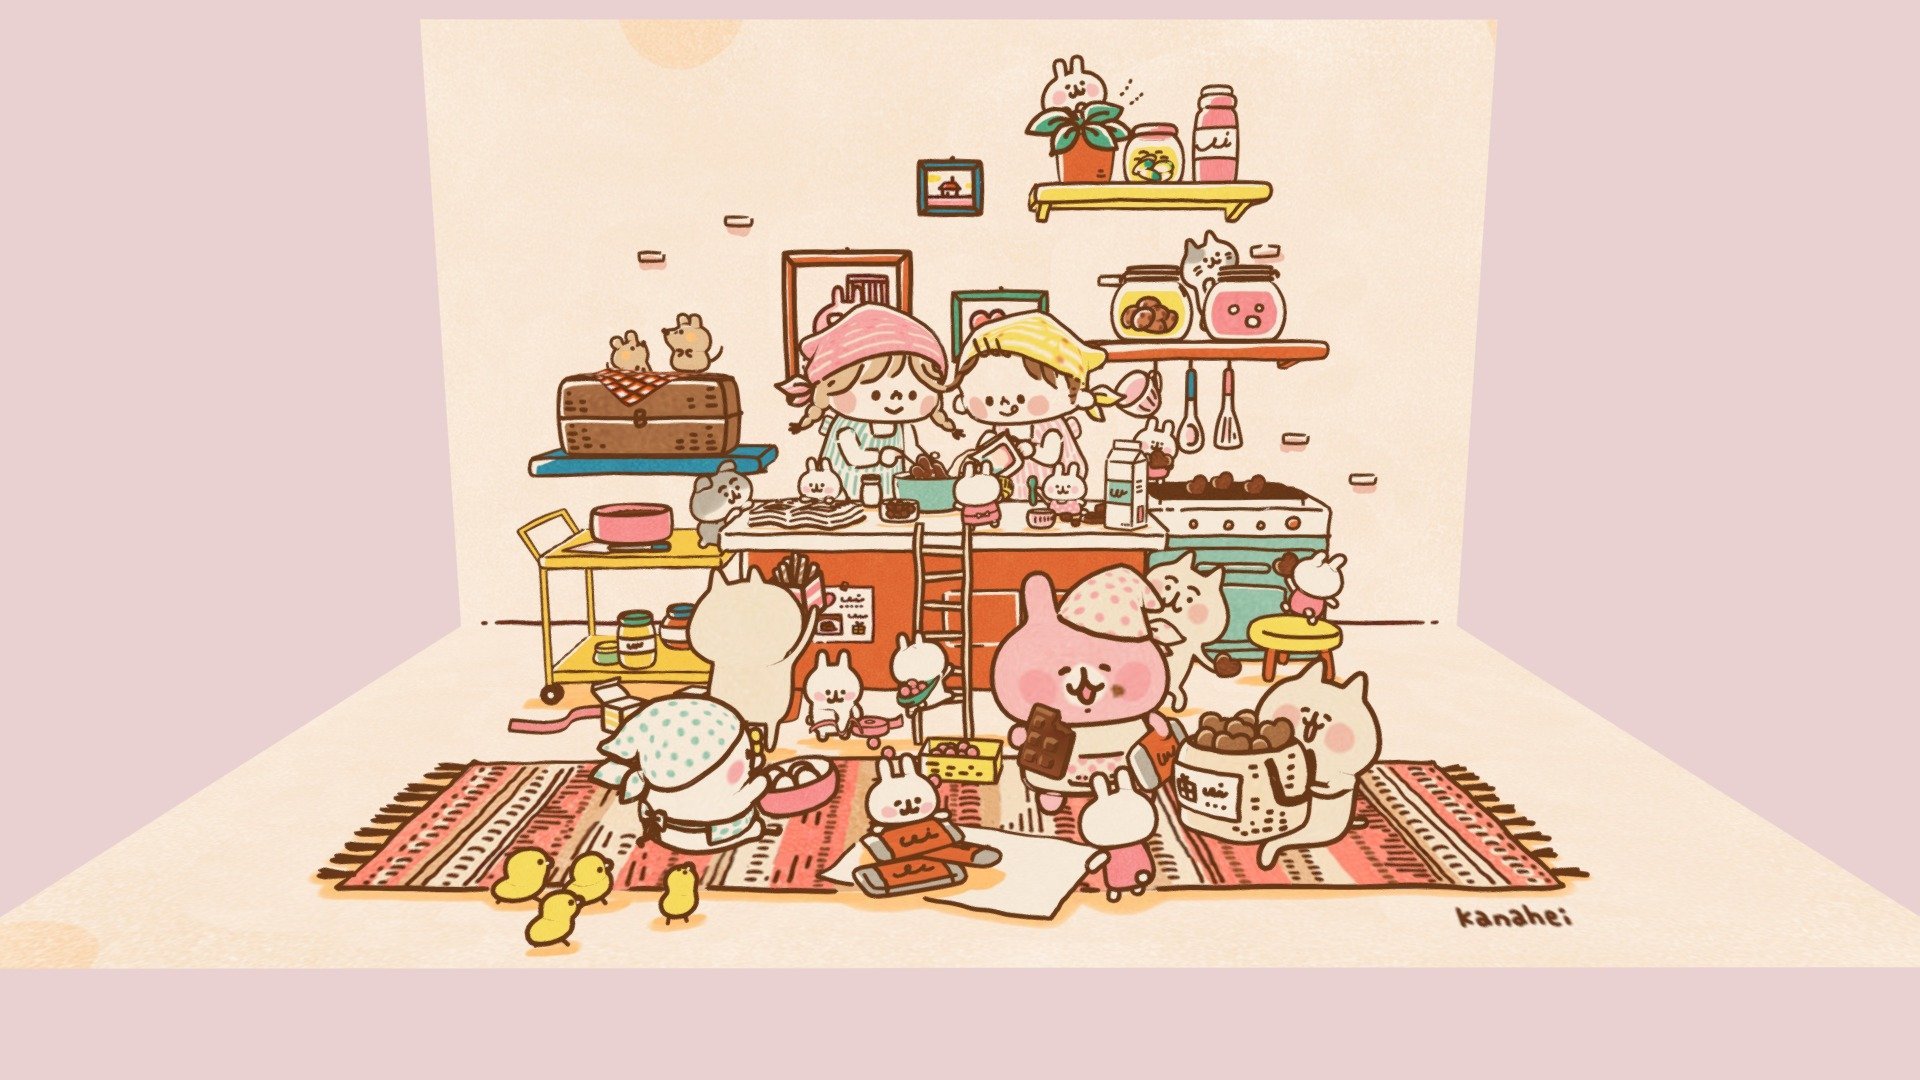 Everyone's kitchen model by kanahei [e909767]